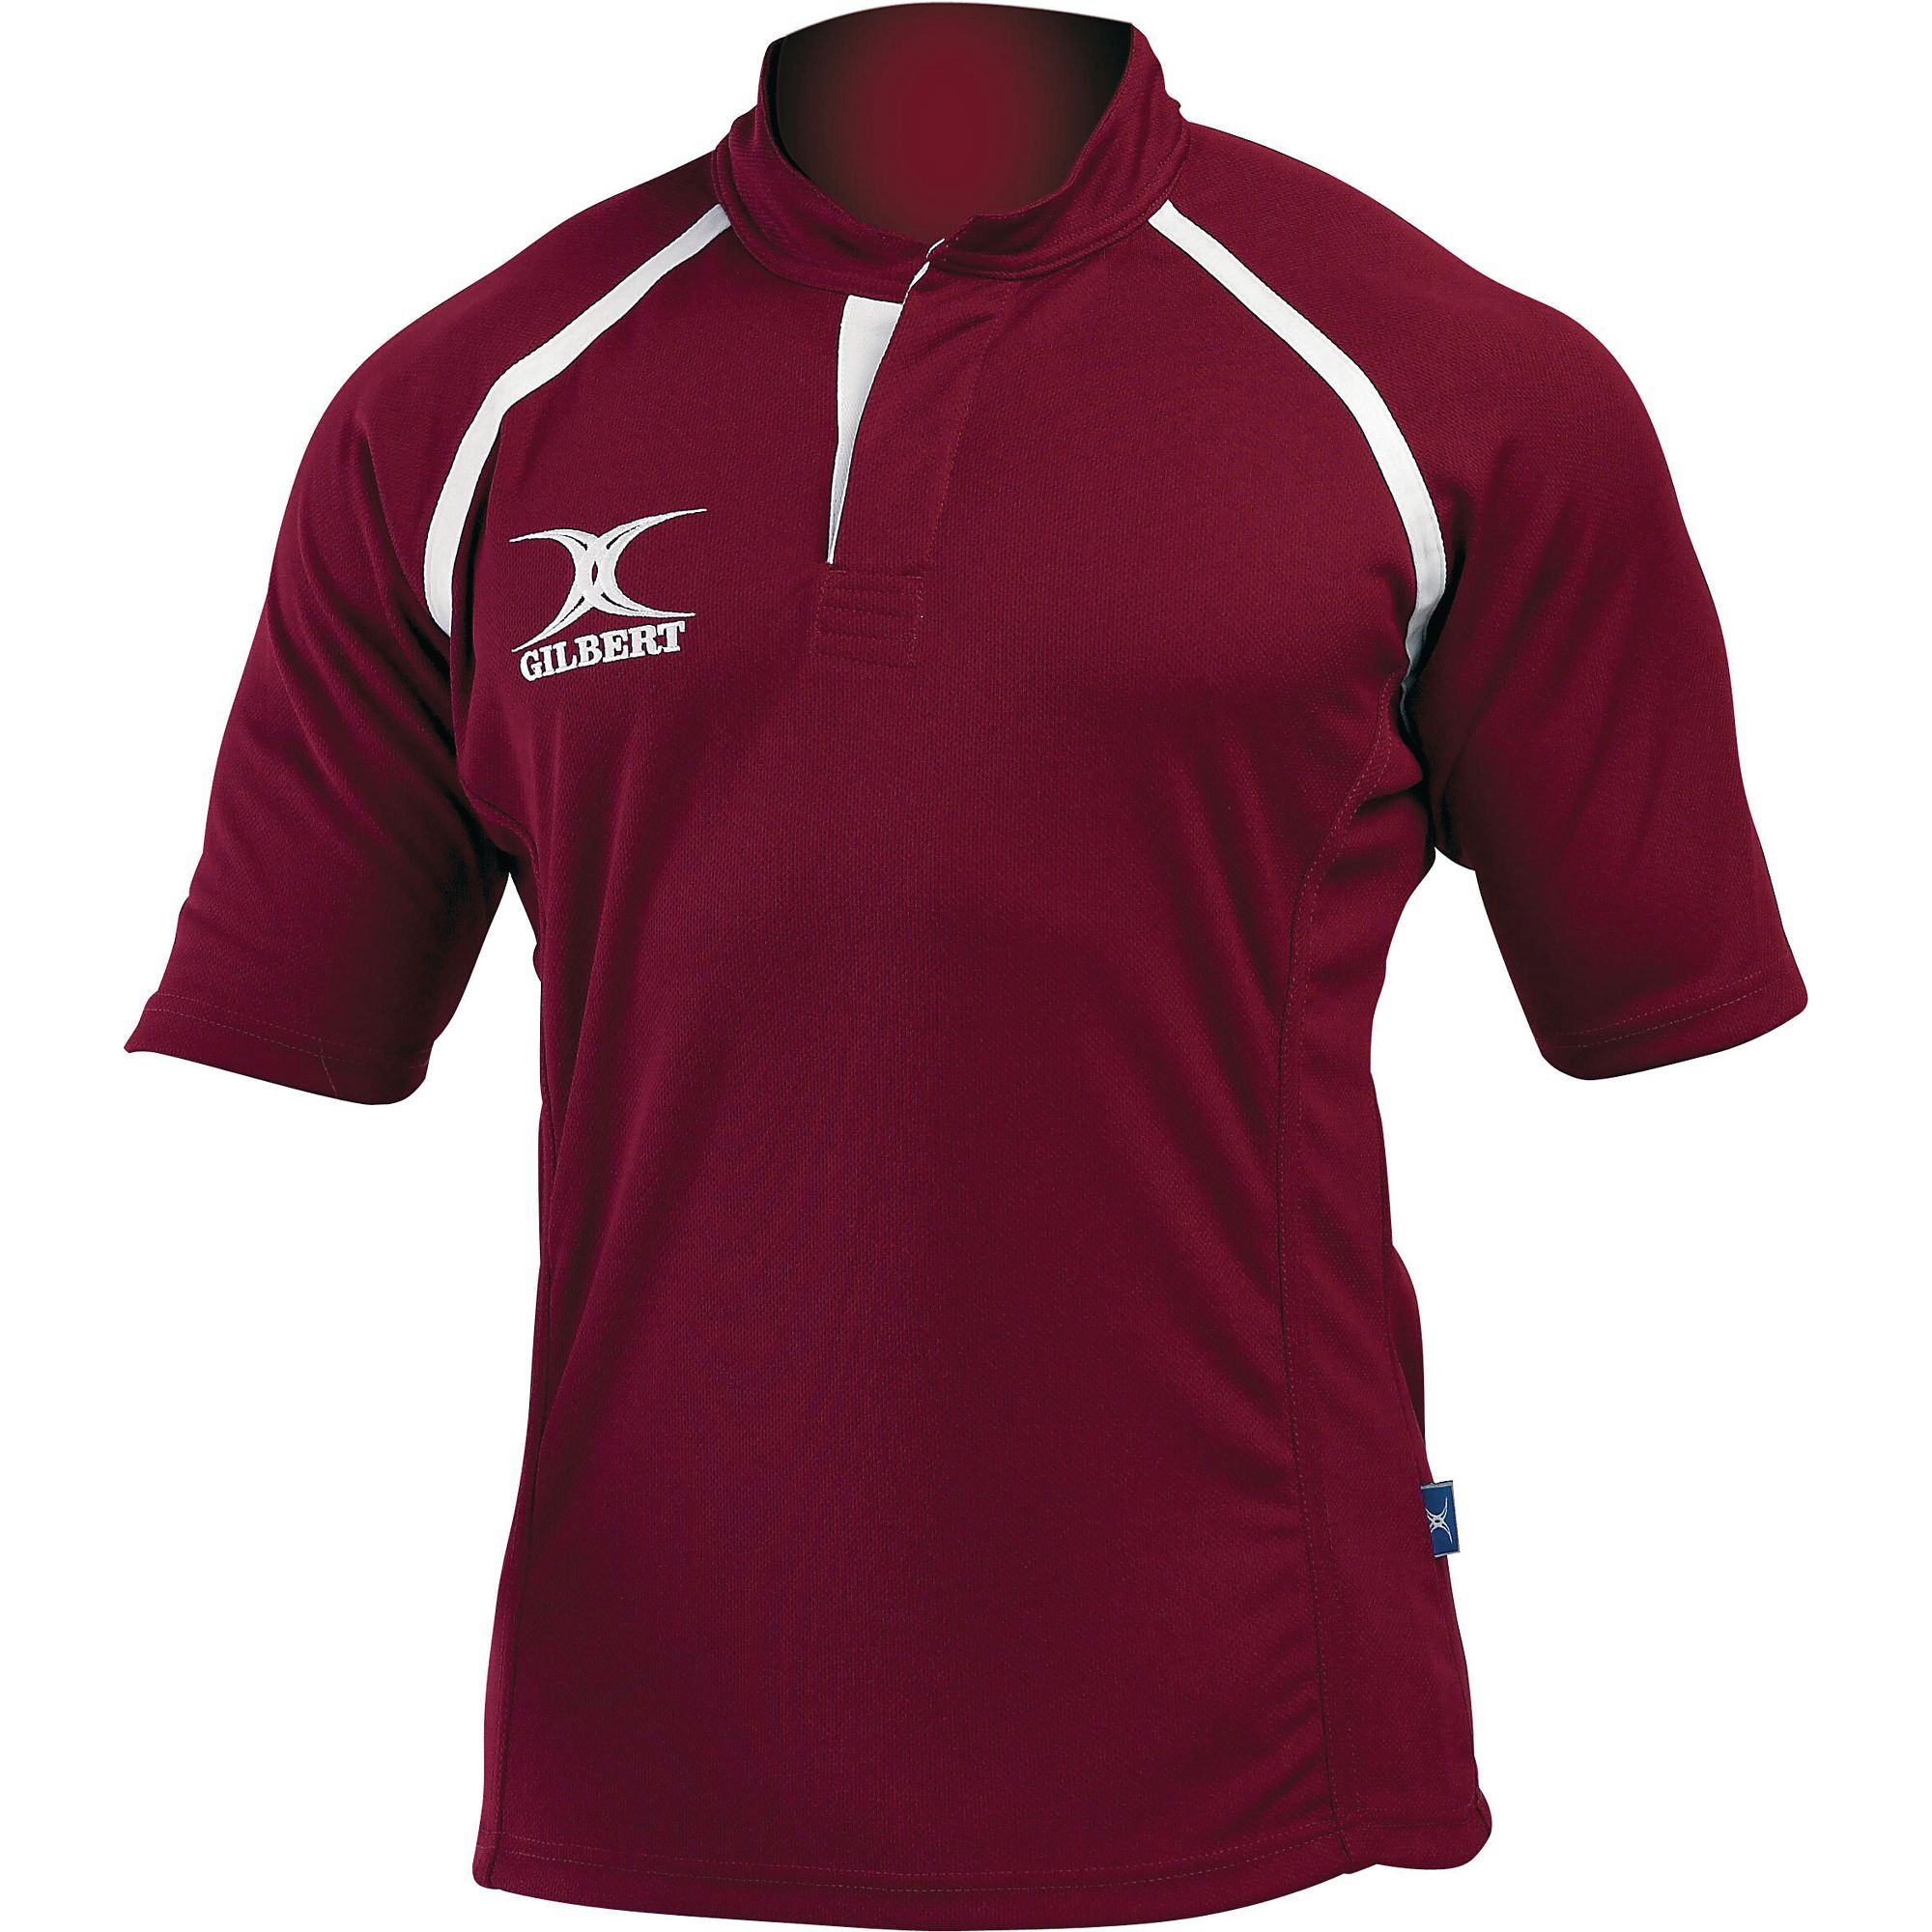 Gilbert Plain Rugby Shirt 30in Maroon